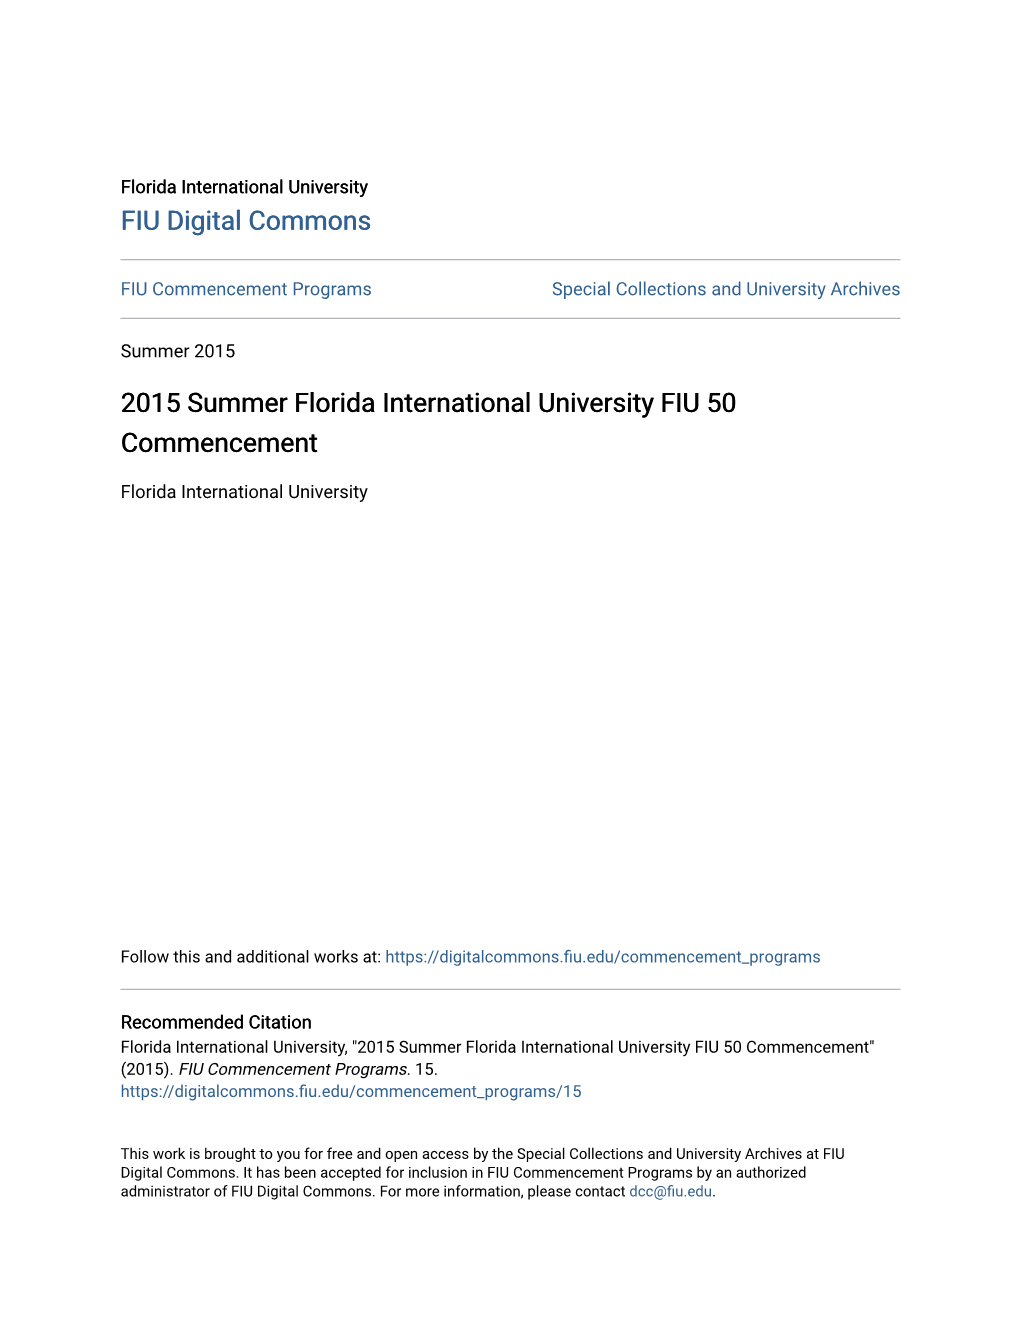 2015 Summer Florida International University FIU 50 Commencement